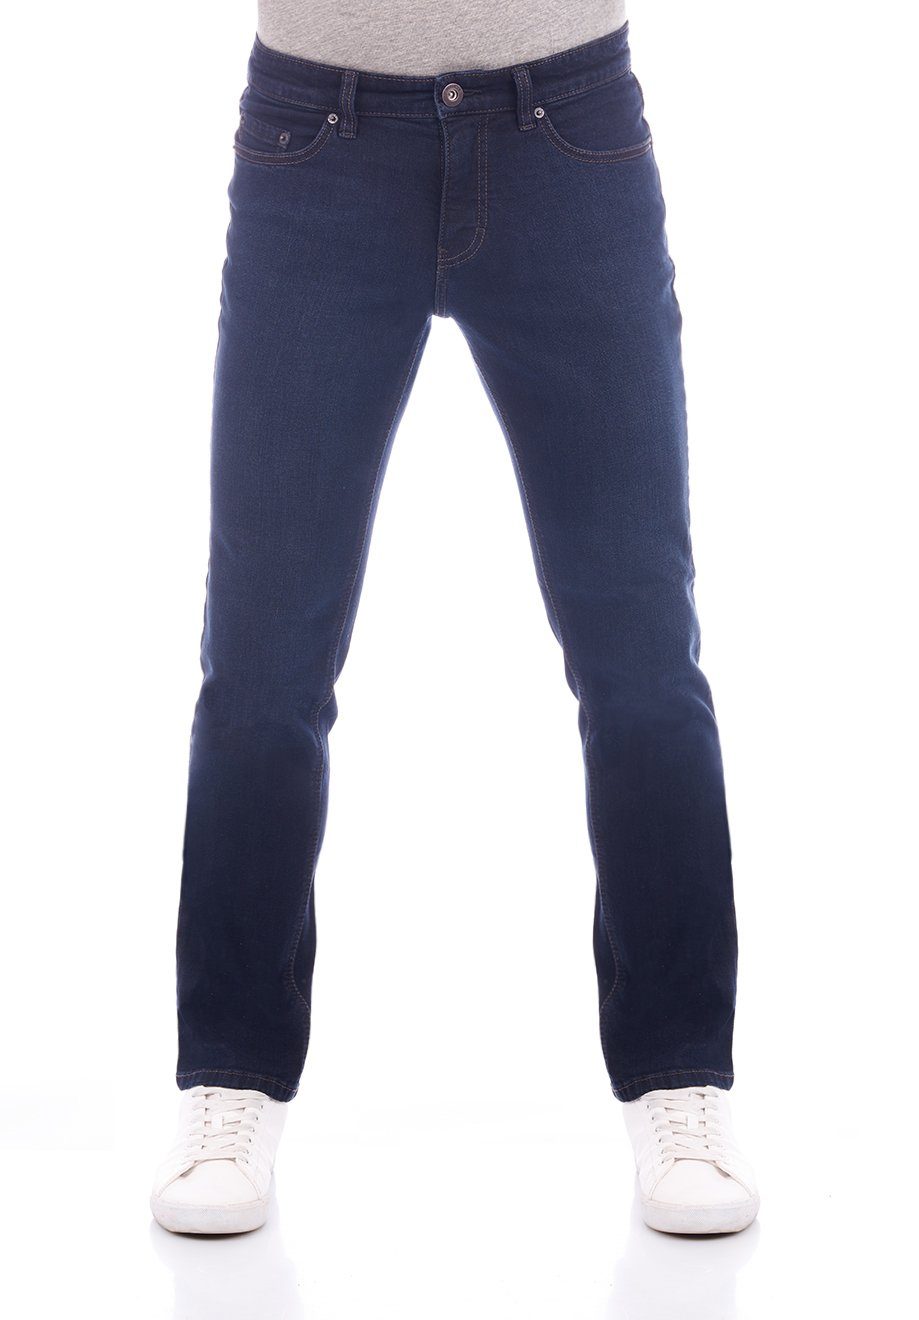 Paddock's Slim-fit-Jeans Herren Jeanshose Stretch Hose Ranger Night Slim (4732) Pipe Blue Denim mit Fit